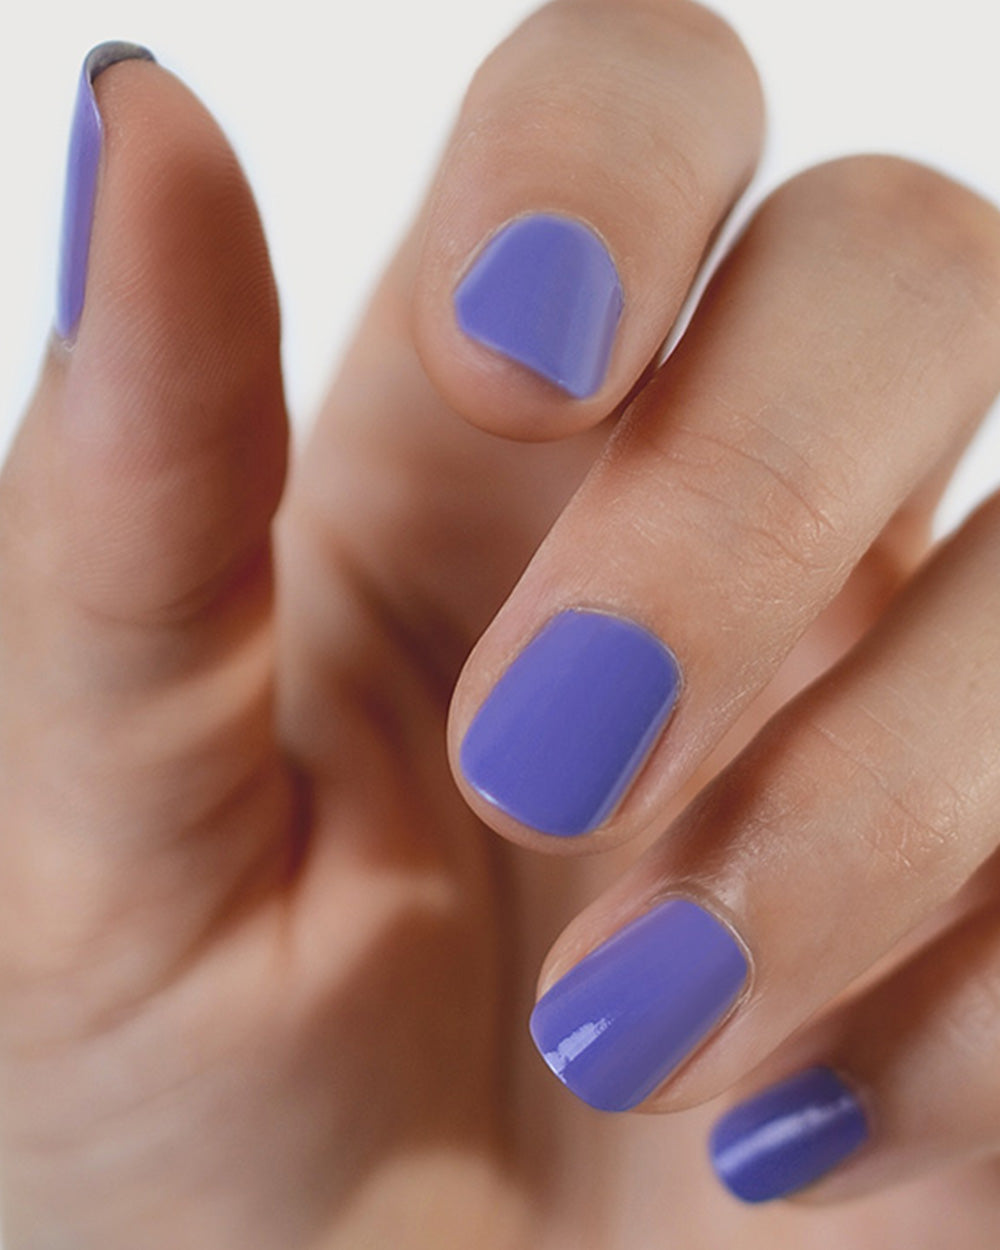 Gentle Blue Lilac Crème nail polish by Sienna Byron Bay on fair skin tone hand.